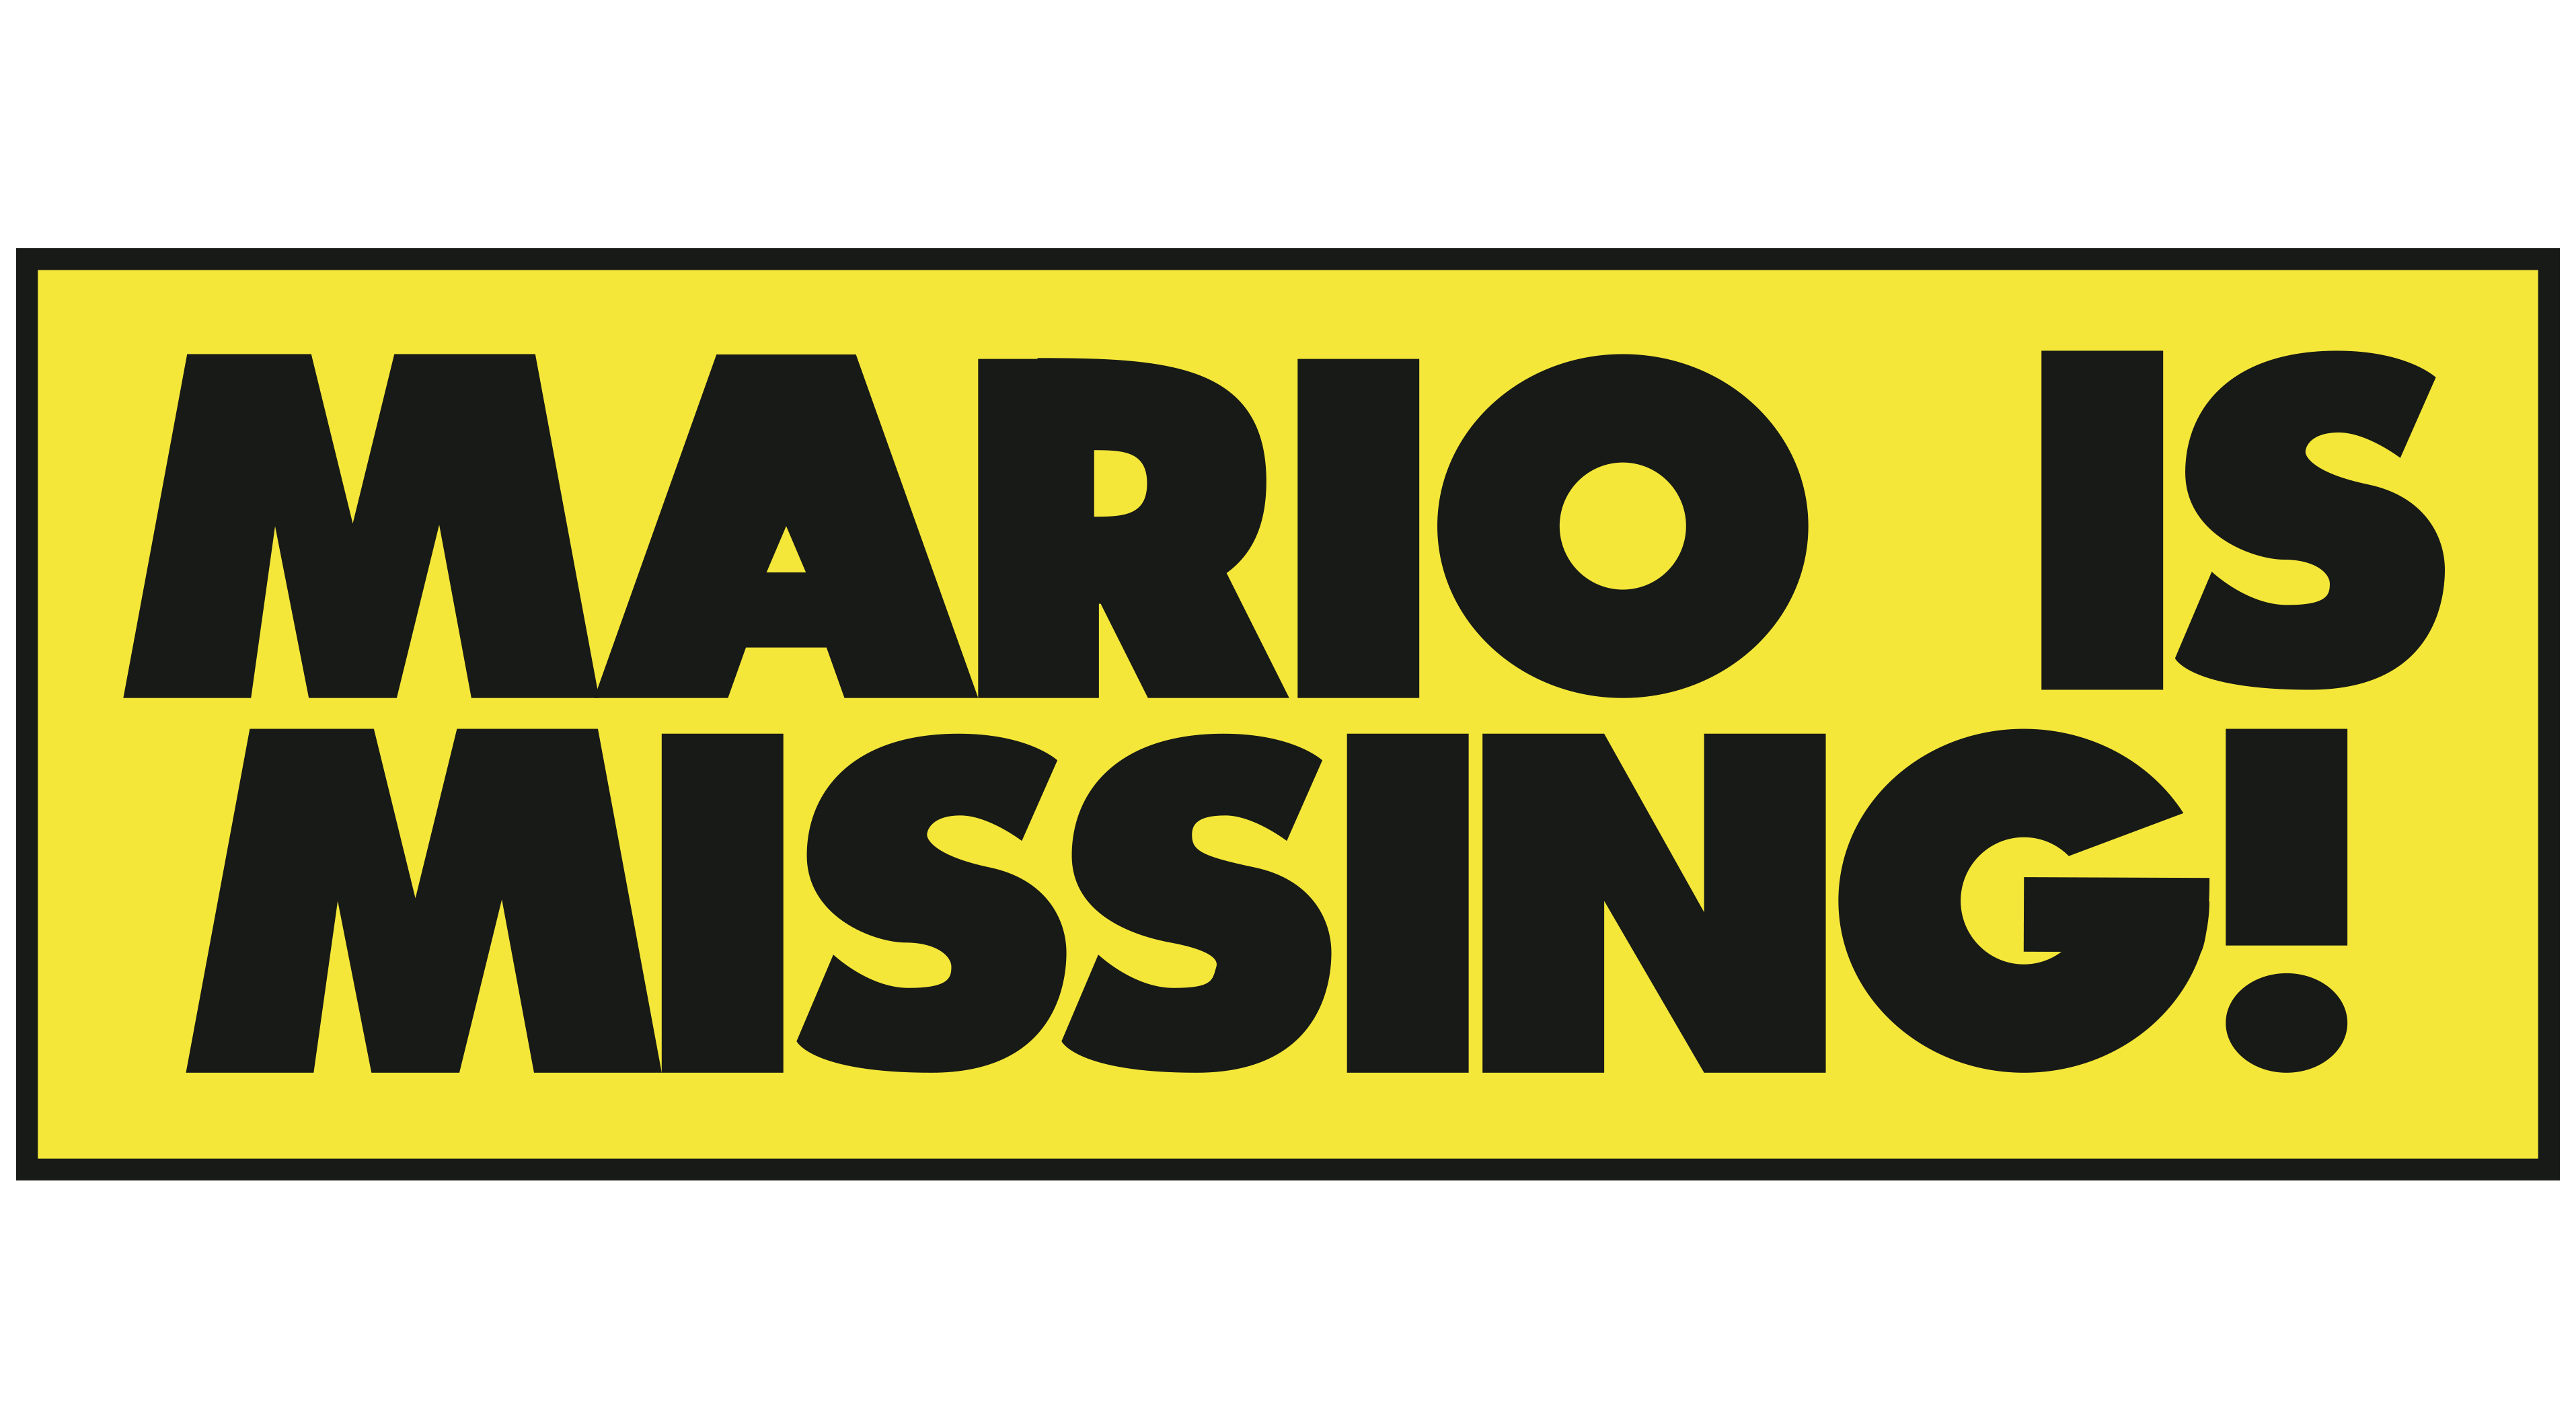 Lok Mario Is Missing trois threesome